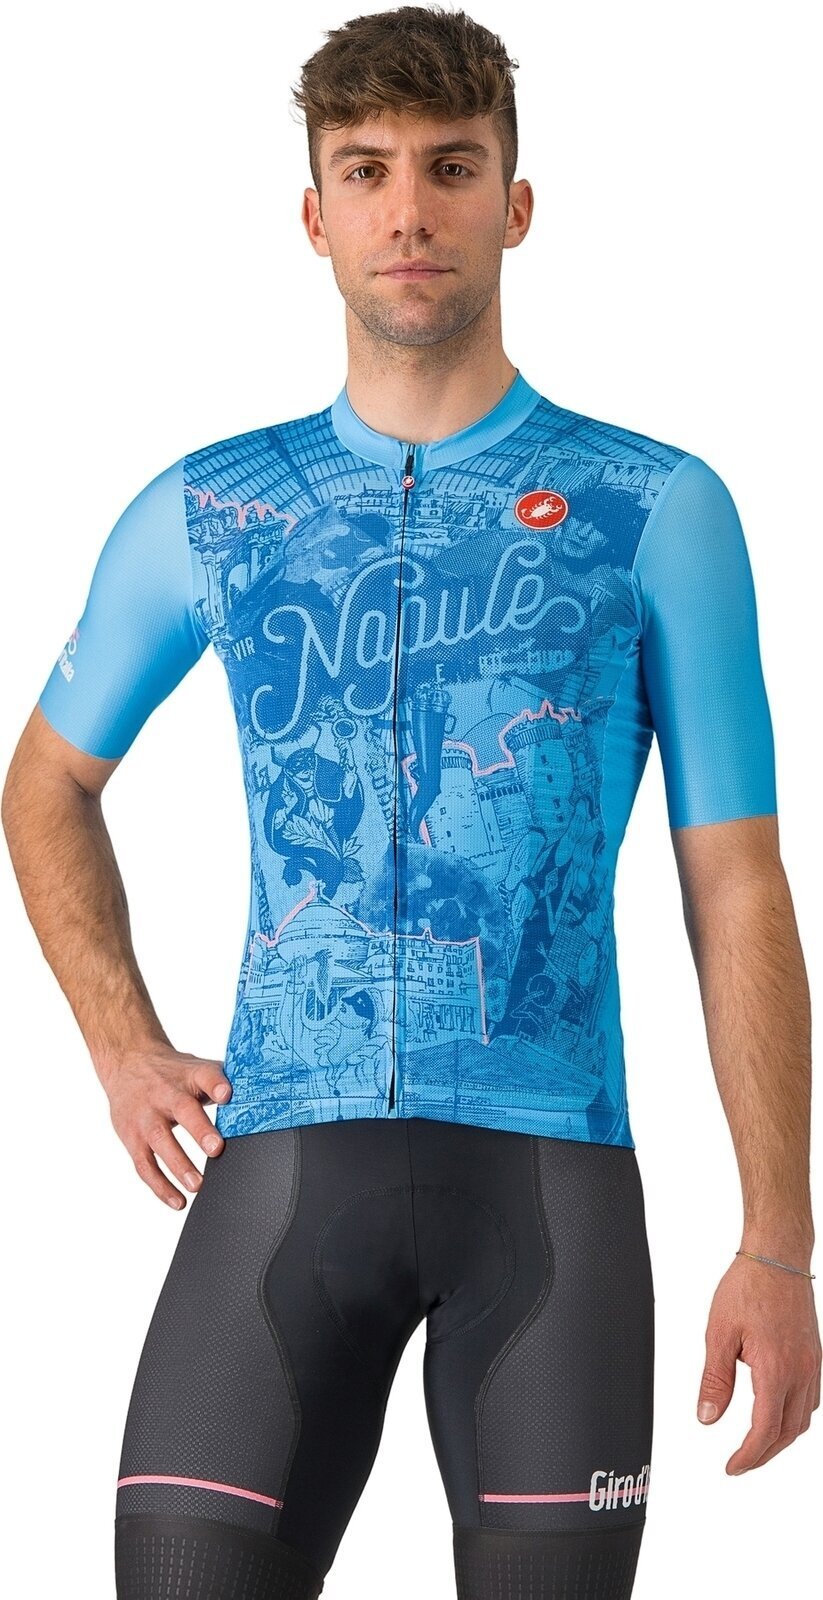 Cycling jersey Castelli Giro107 Napoli Jersey Azzurro Napoli L